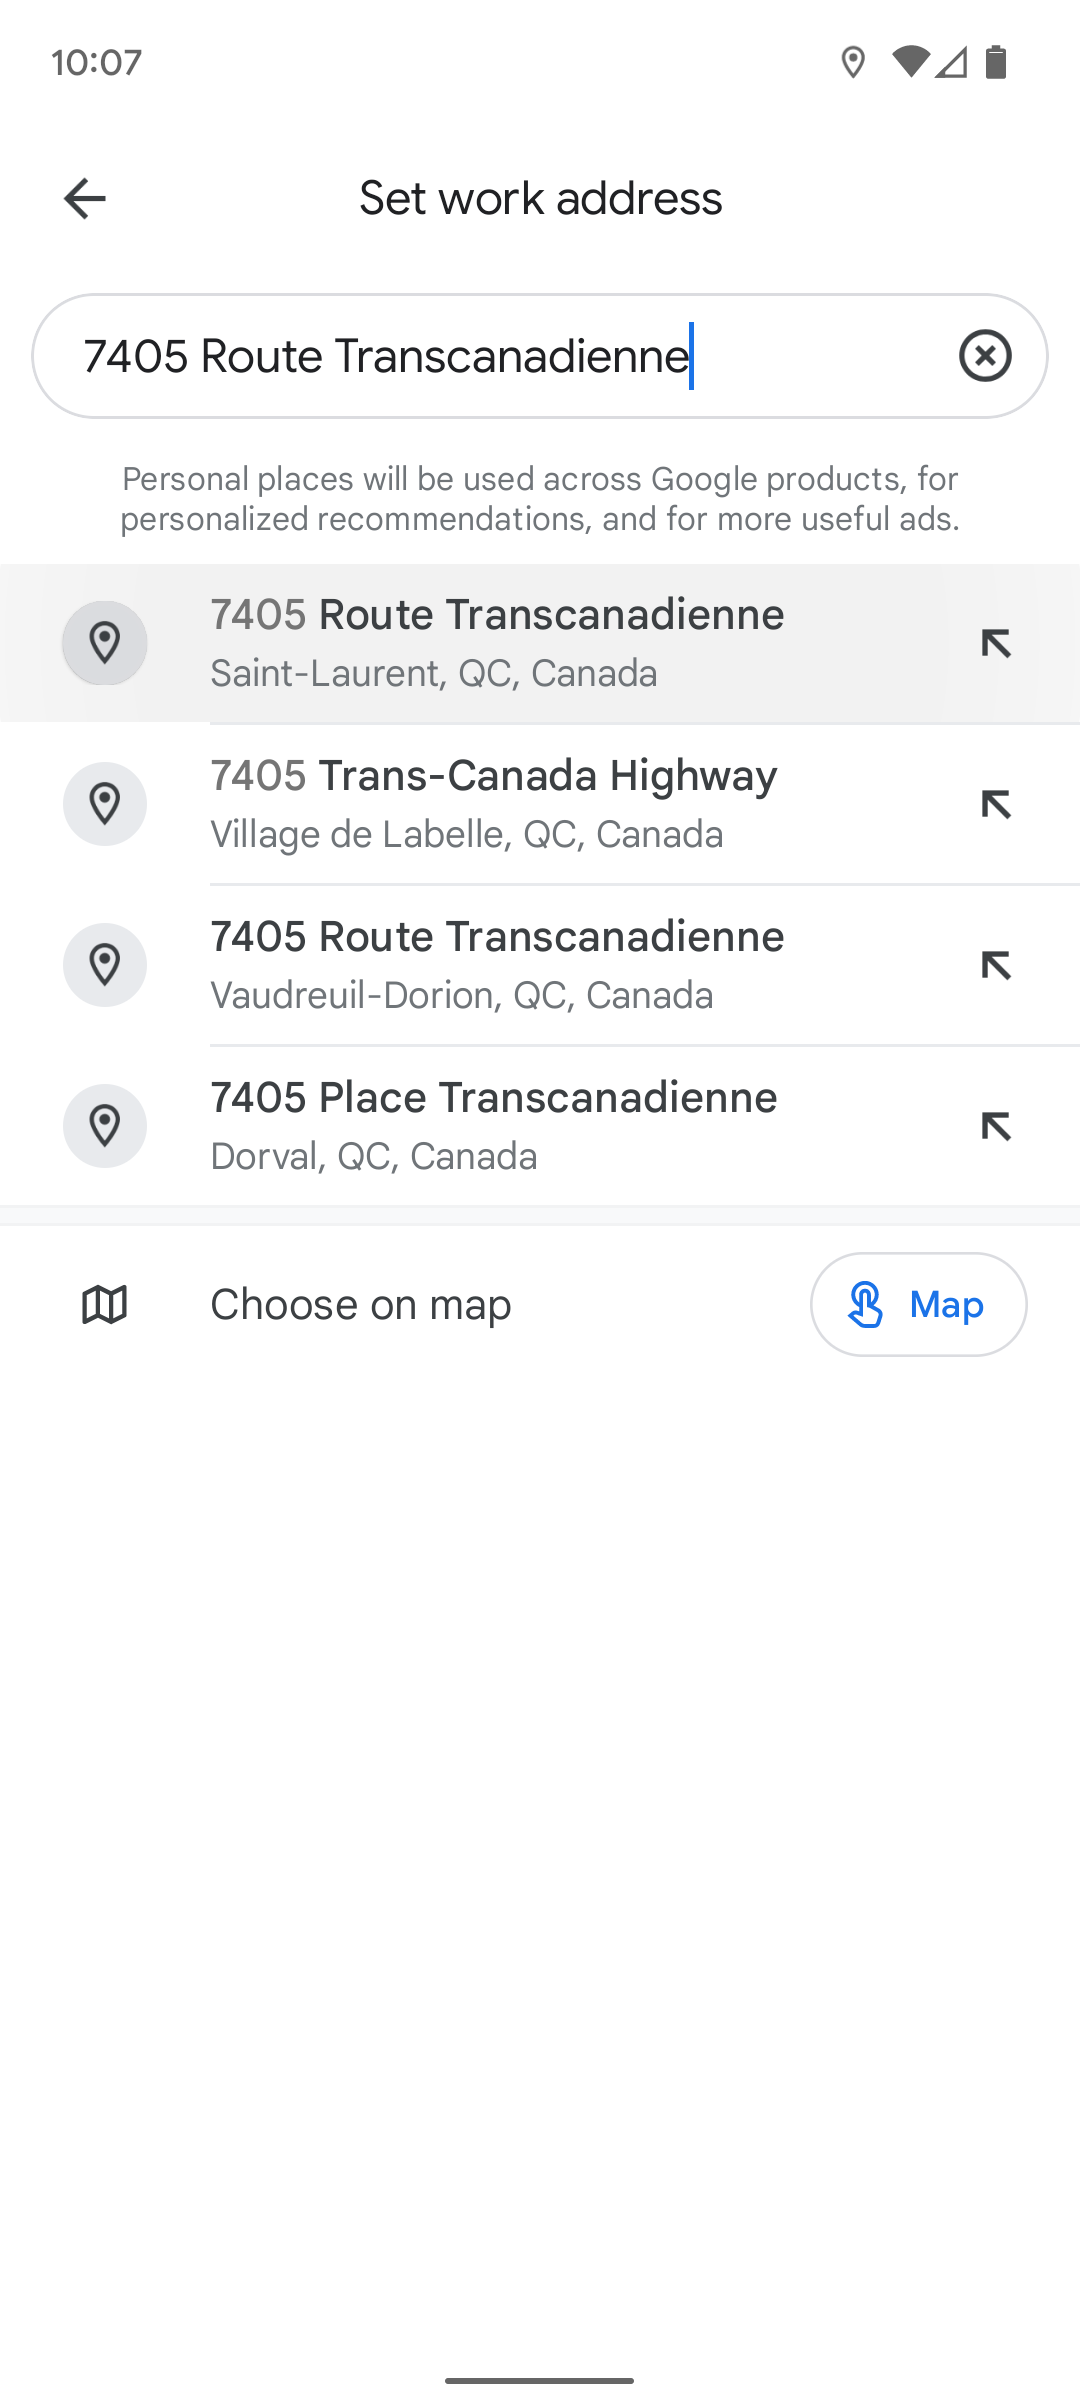 Google Maps mobile app menu to set your work address.